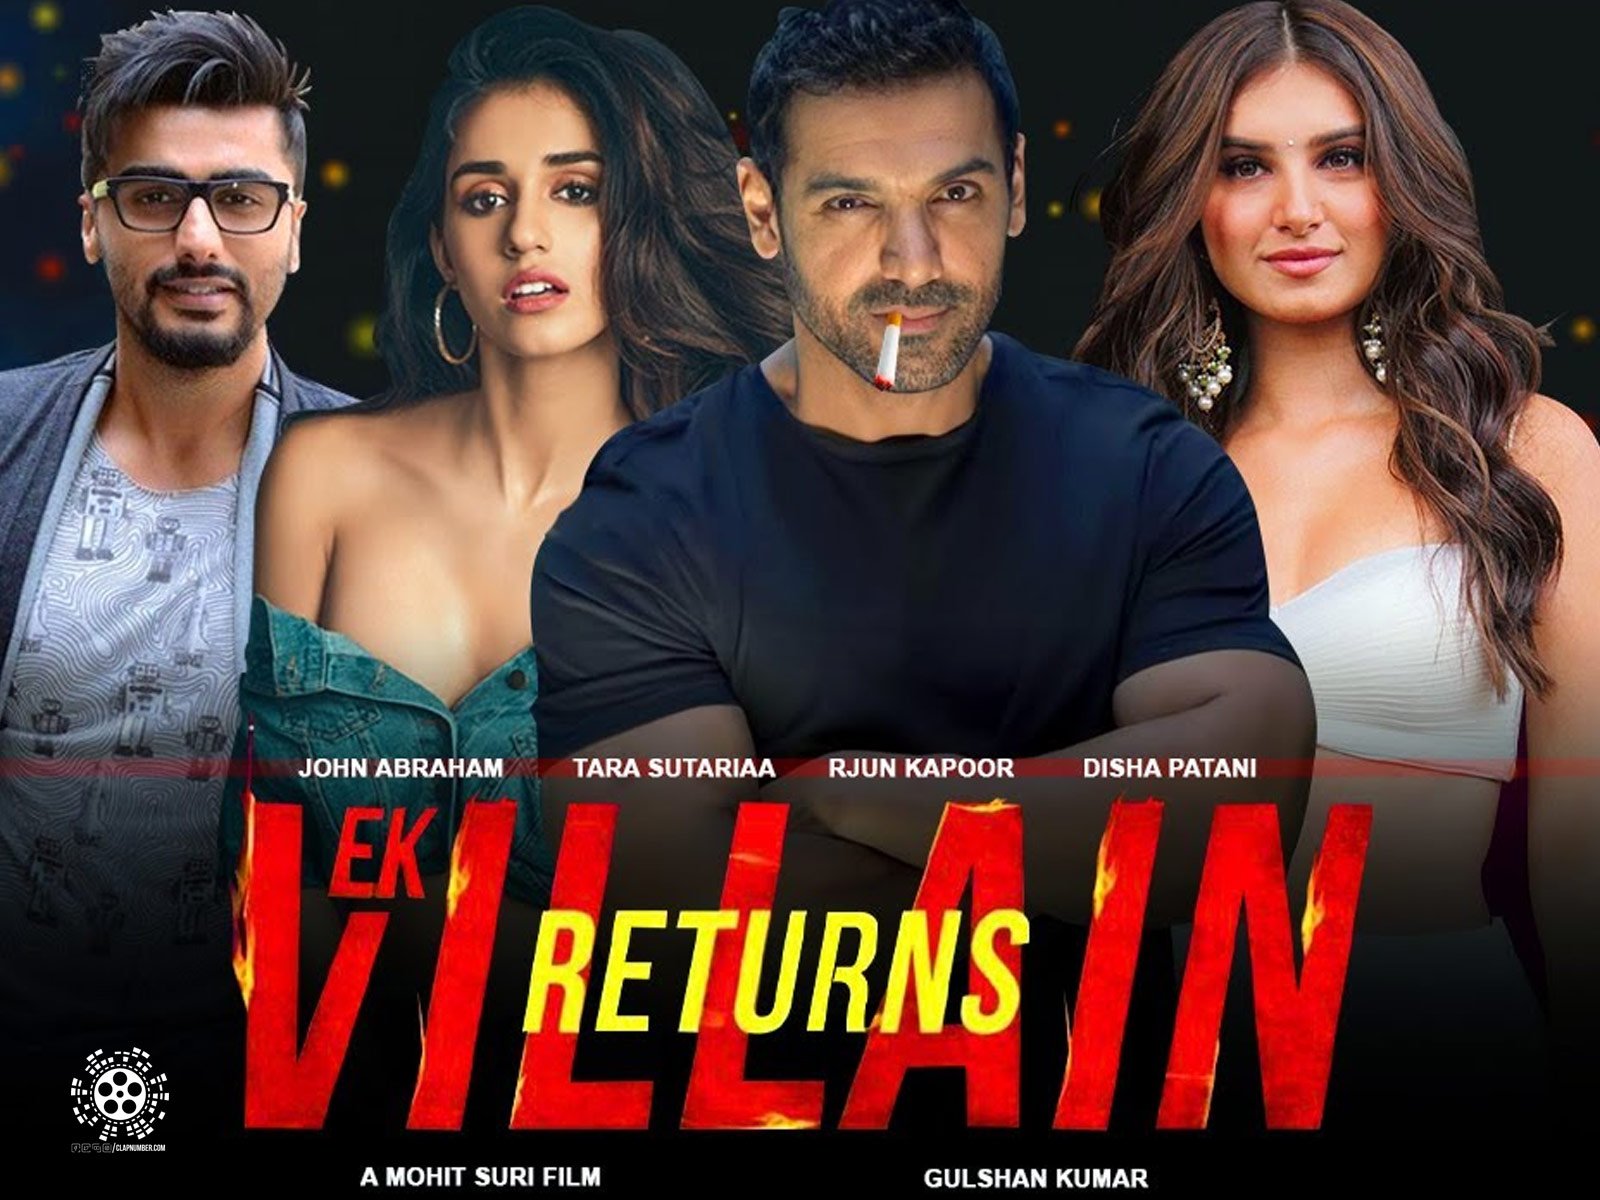 Ek Villain Return Team Move To Goa To Shoot Action Sequence